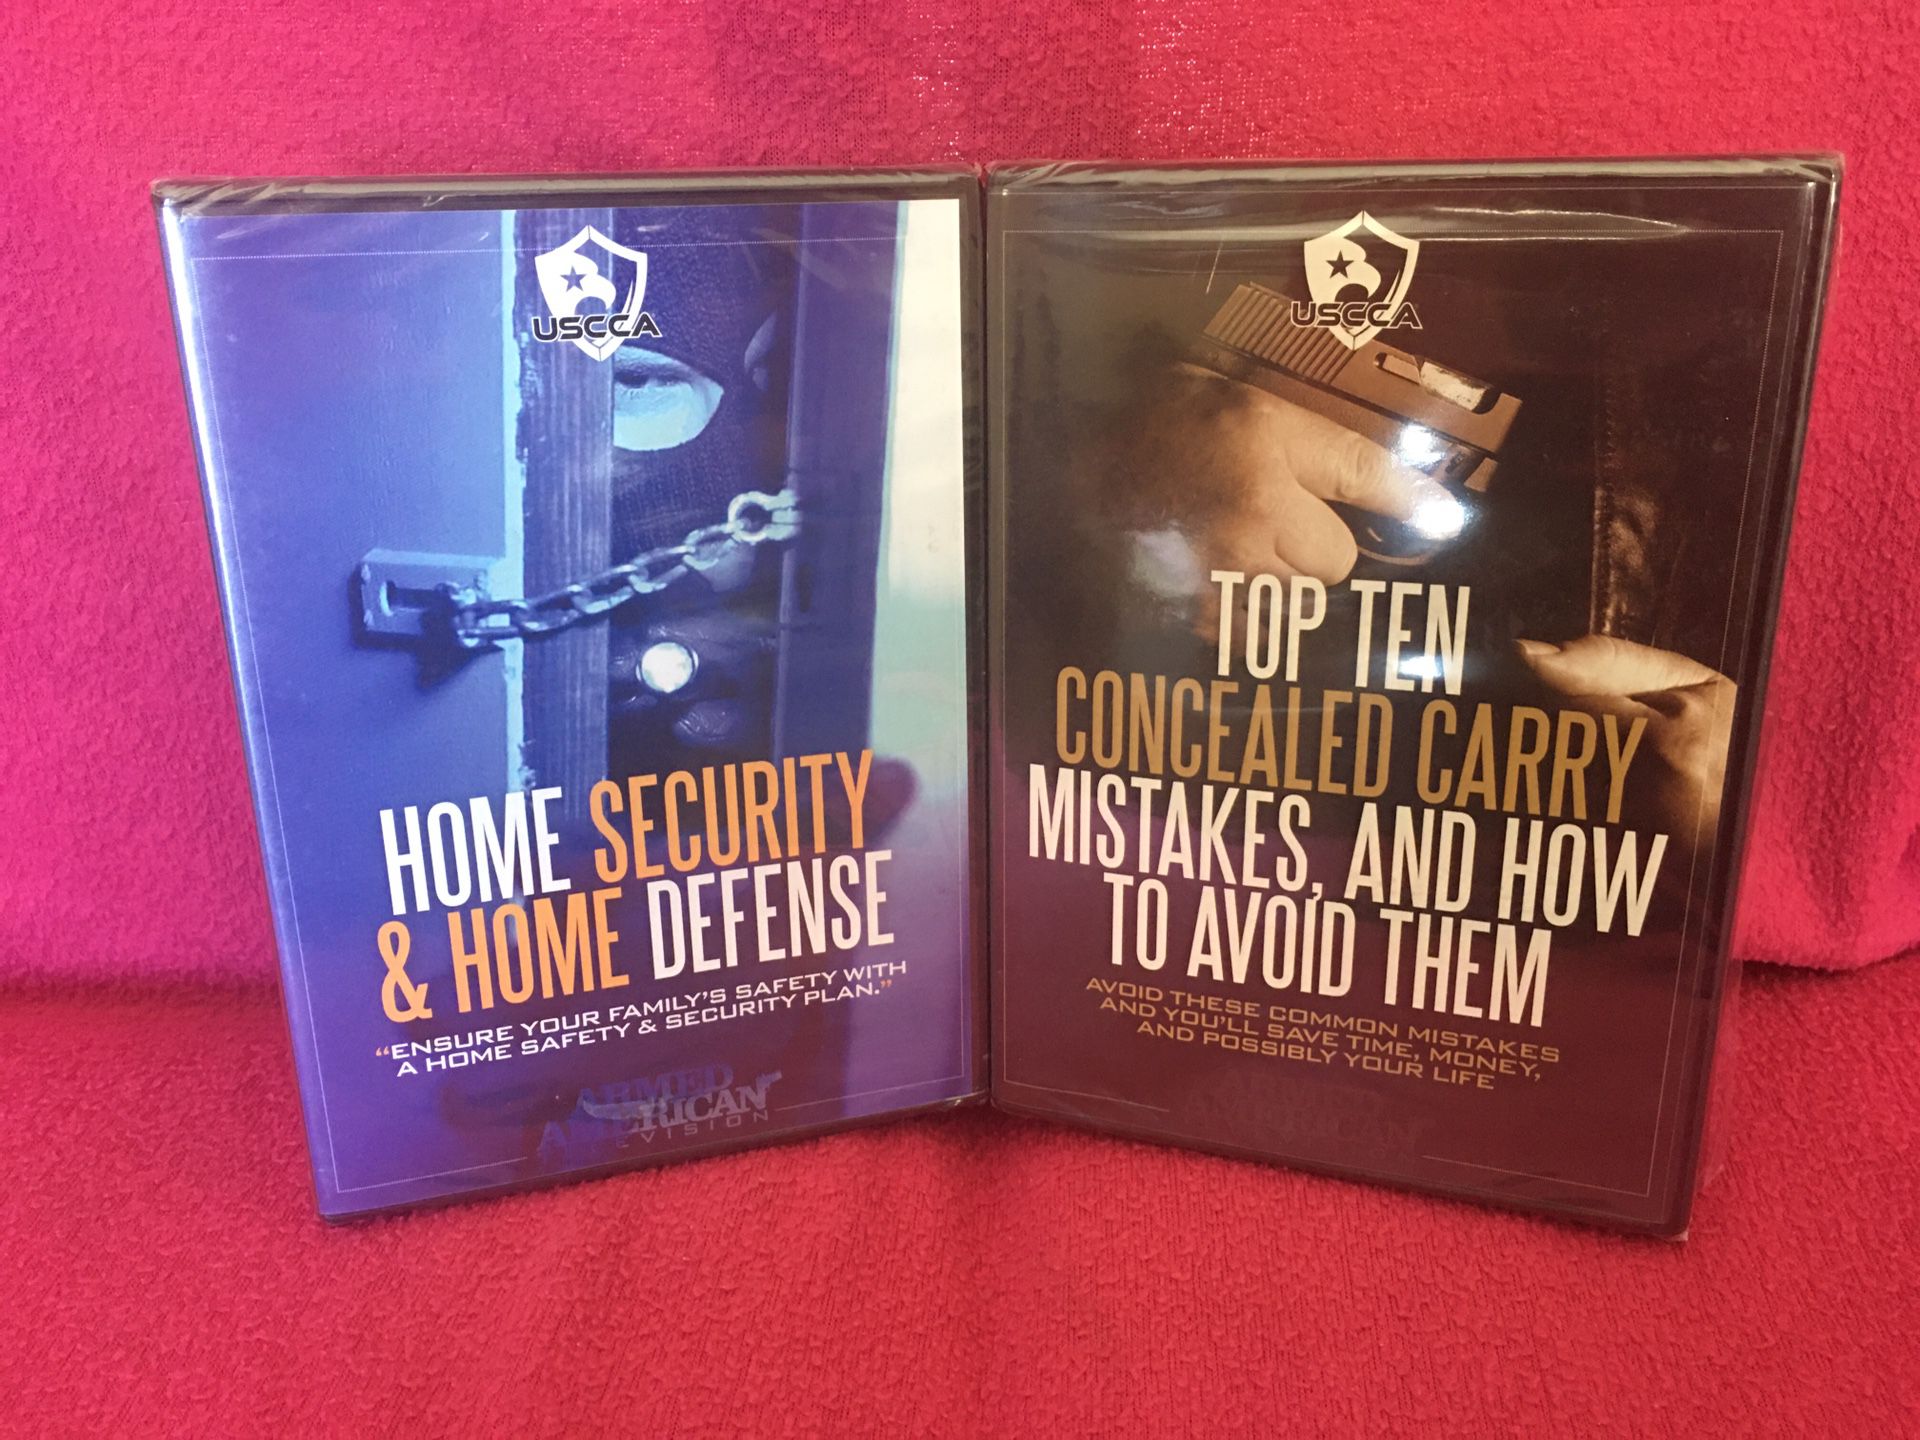 Handgun Safety Security DVD’s BRAND NEW IN PACKAGE